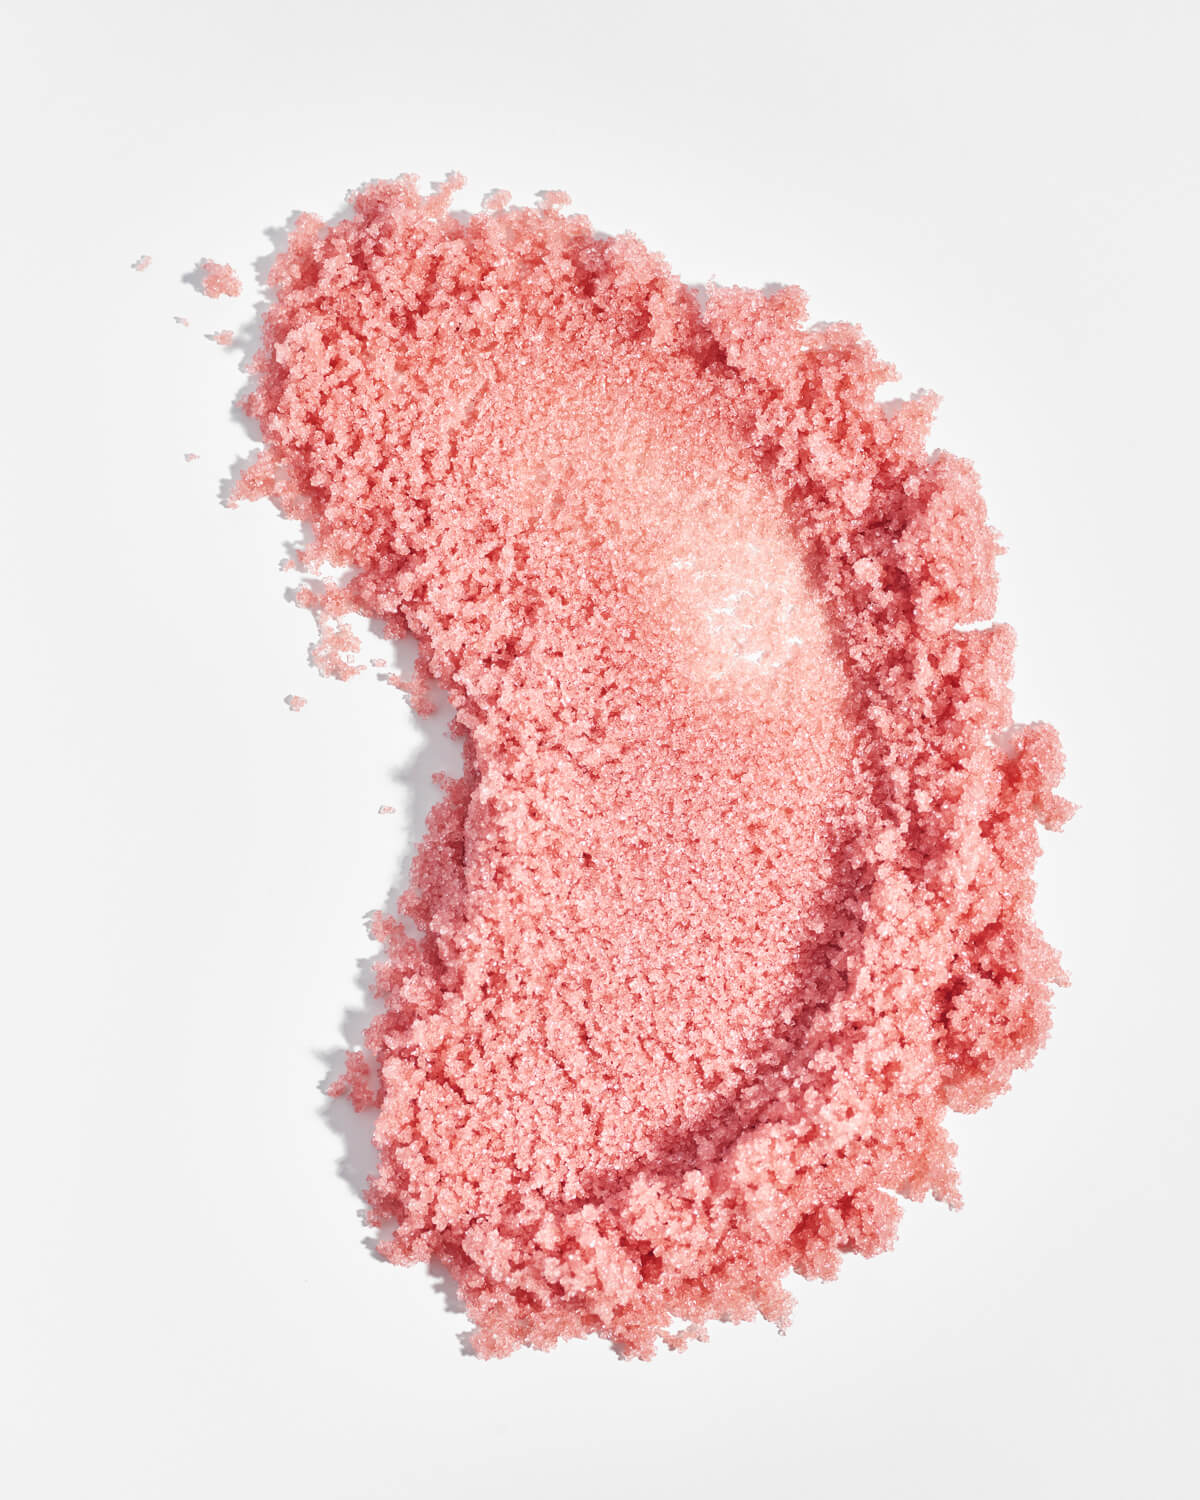 Australian Pink Clay Smoothing Body Scrub